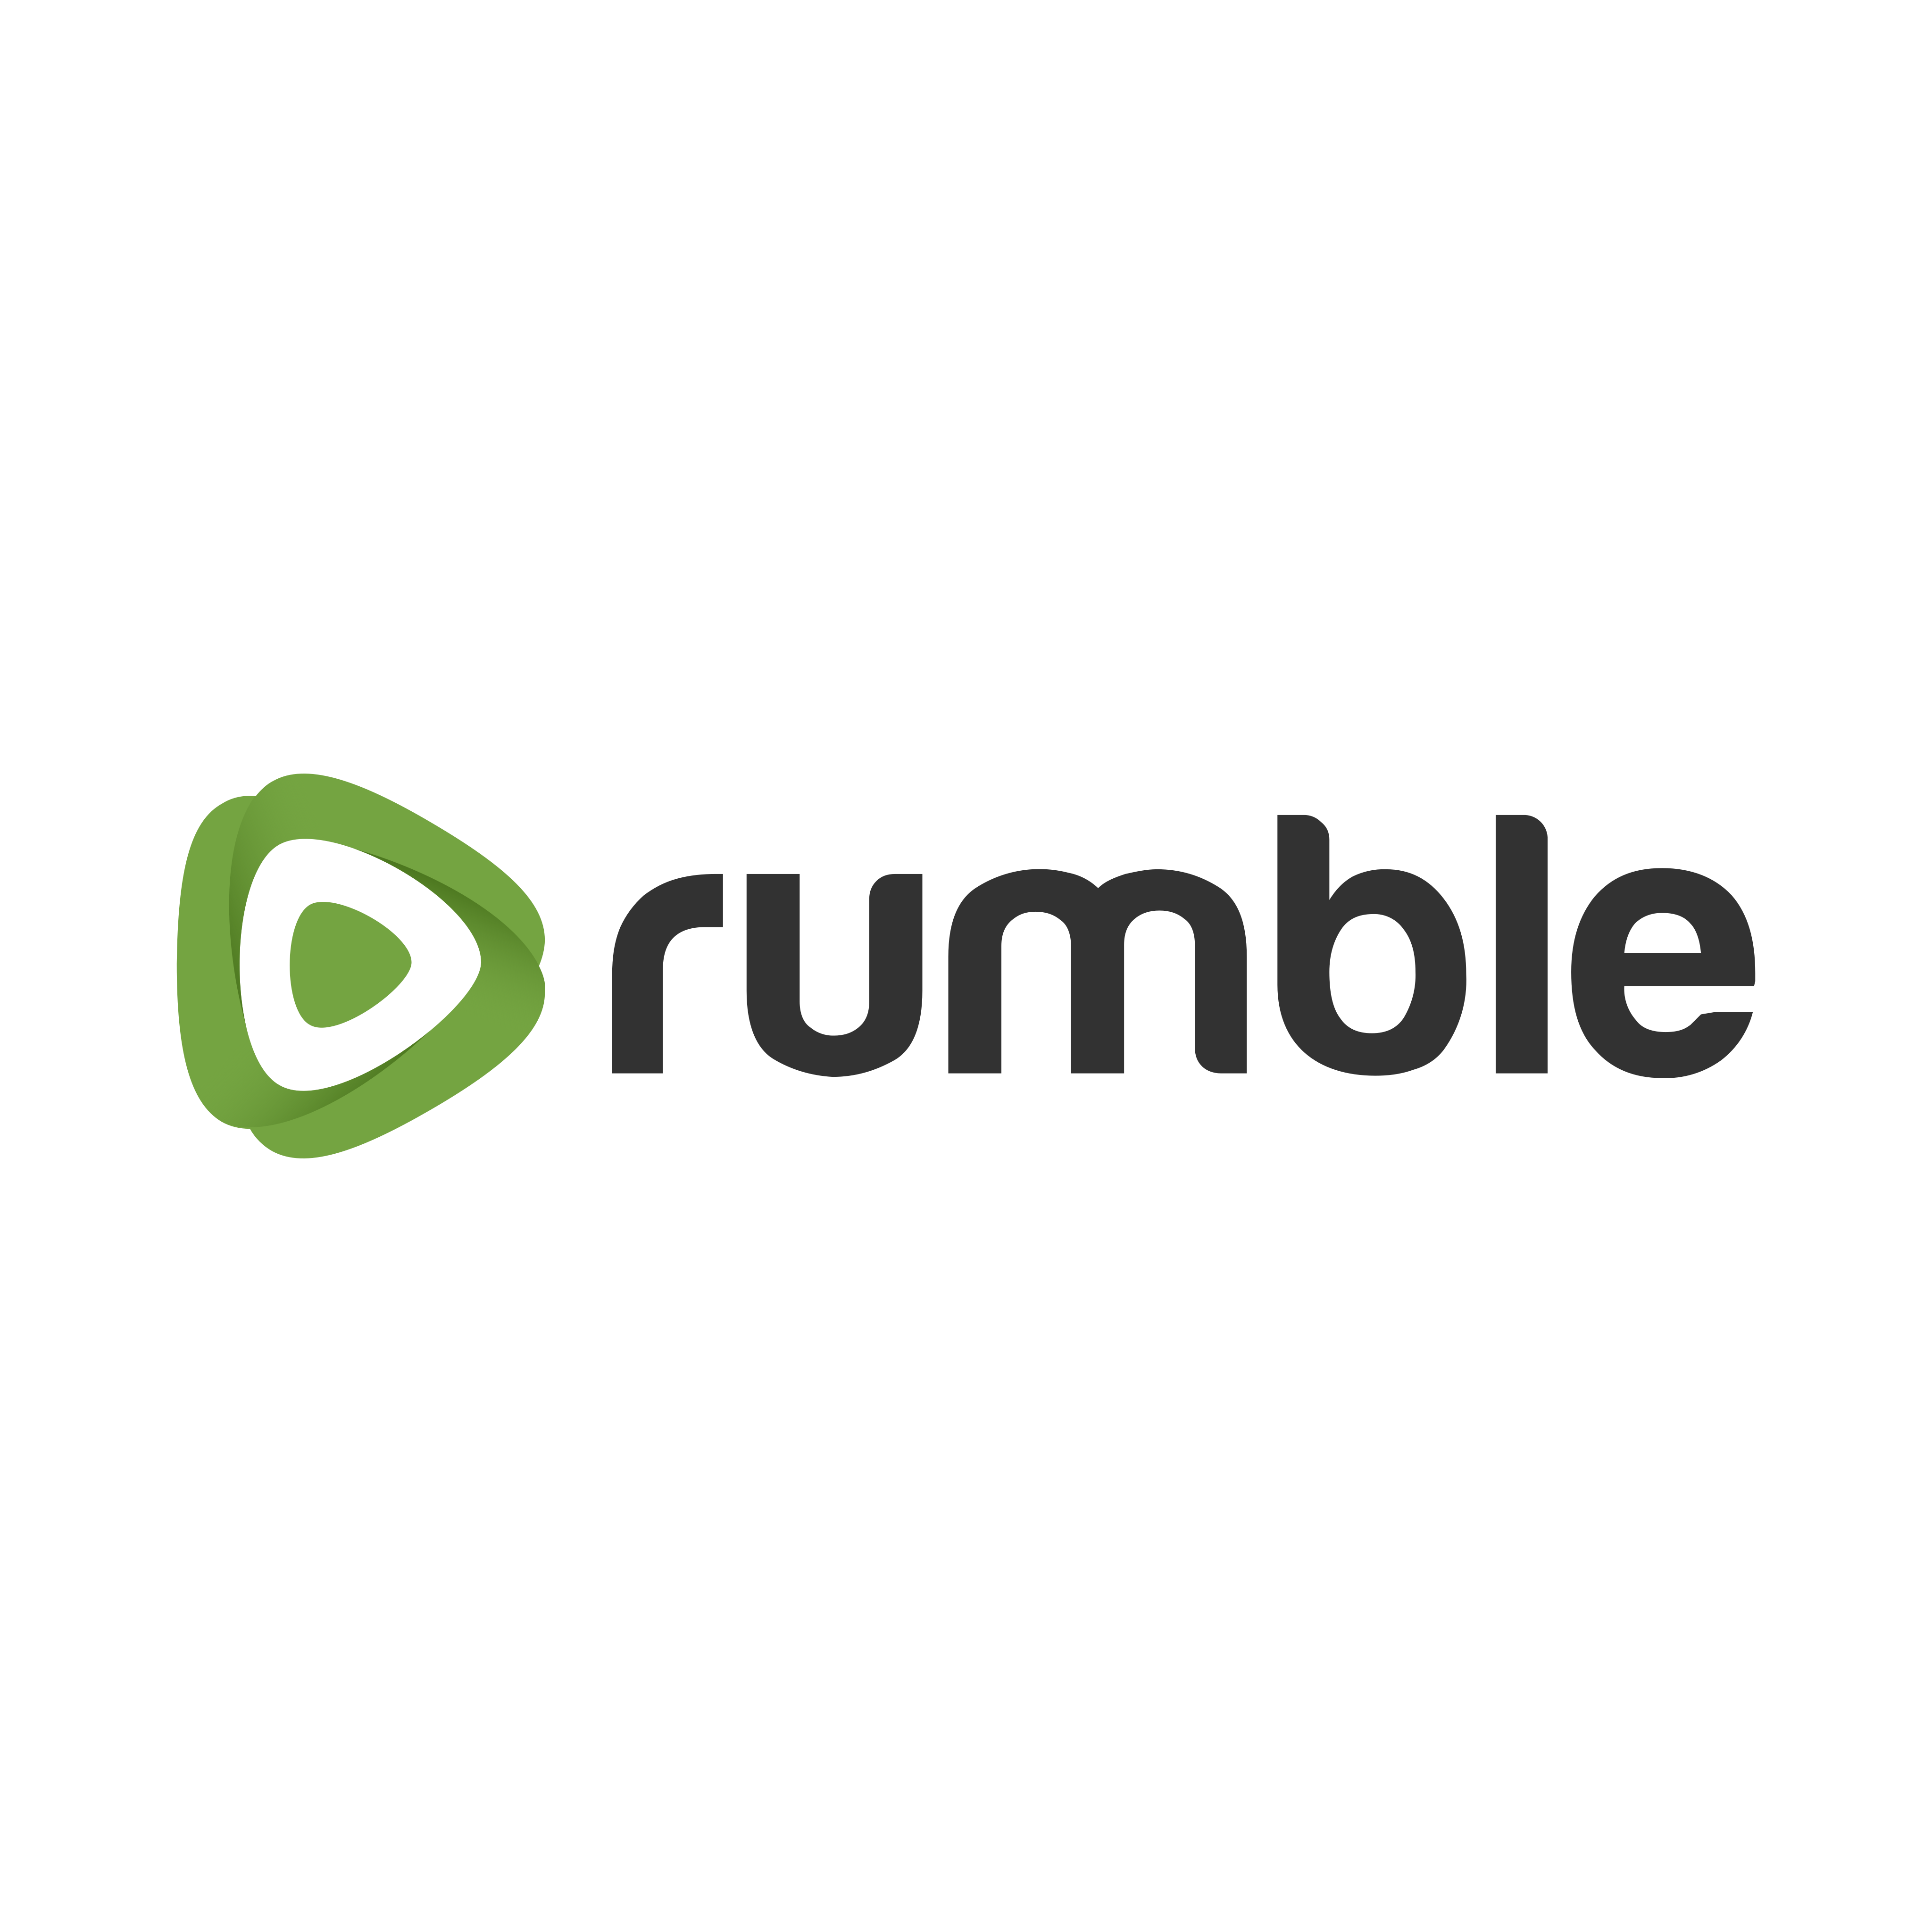 rumble logo 0 - Rumble Logo